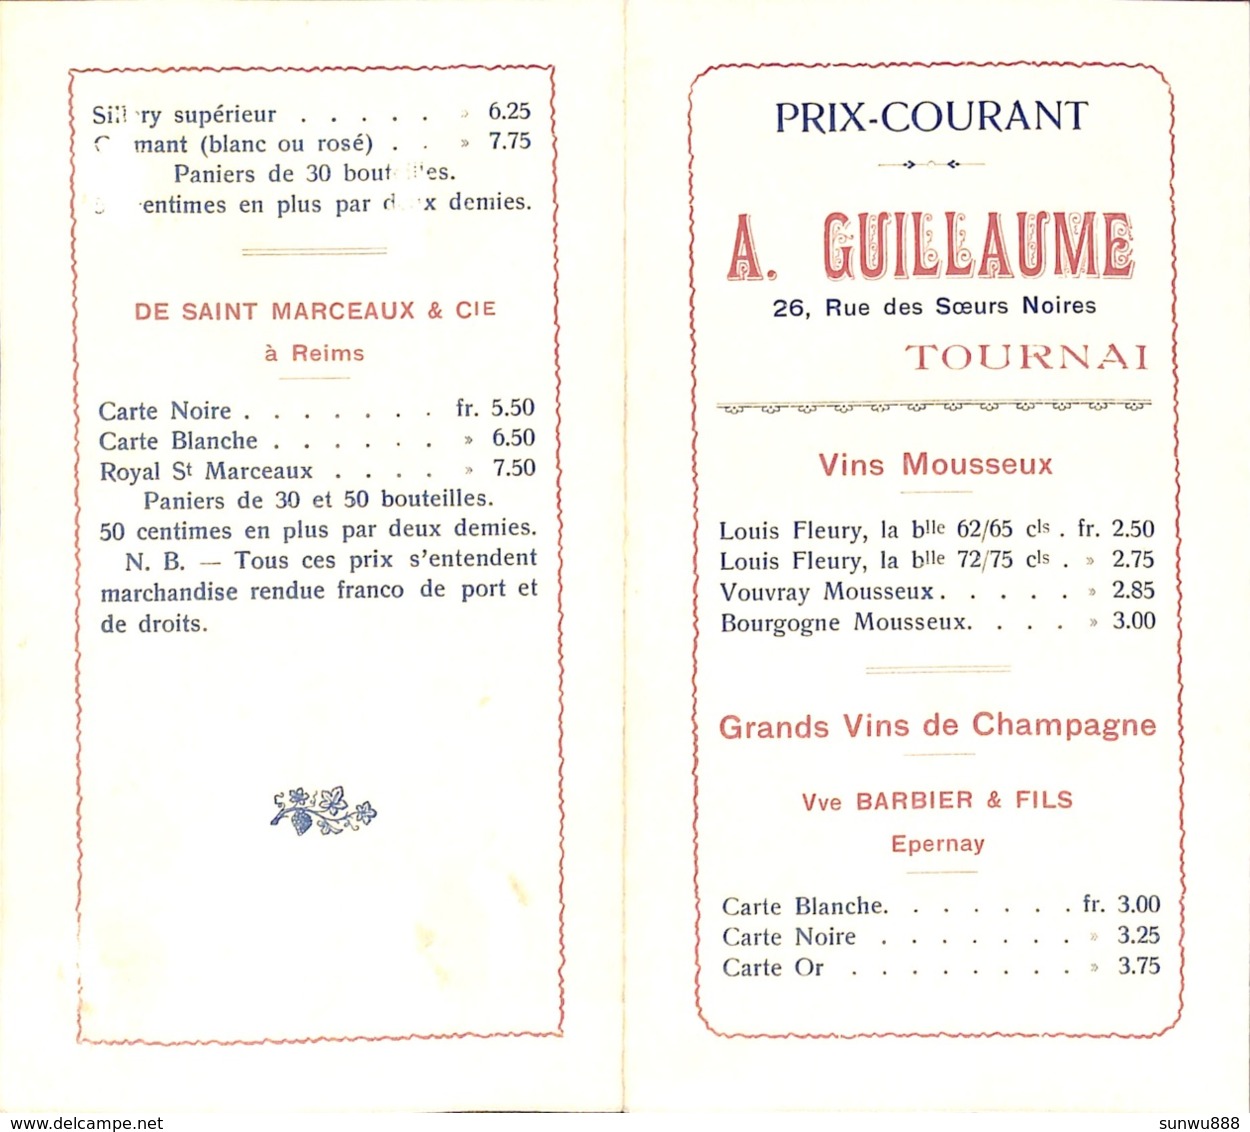 Prix-Courant A. Guillaume Tournai - Vins Mousseux, Champagne Epernay, Crémant... - Alimentaire